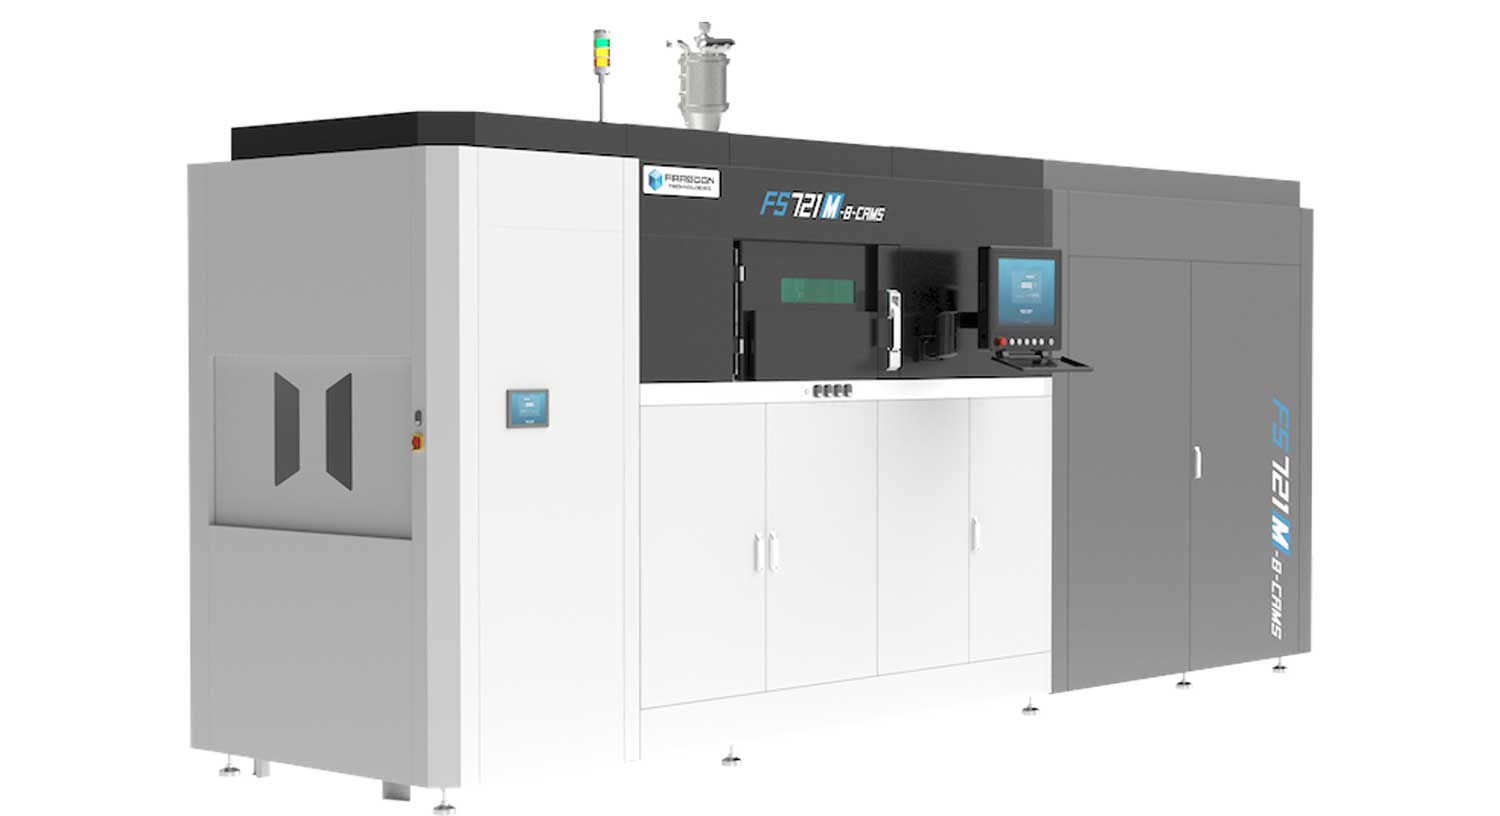 Farson introduces the FS721M-8-CAMS industrial metal 3D printer